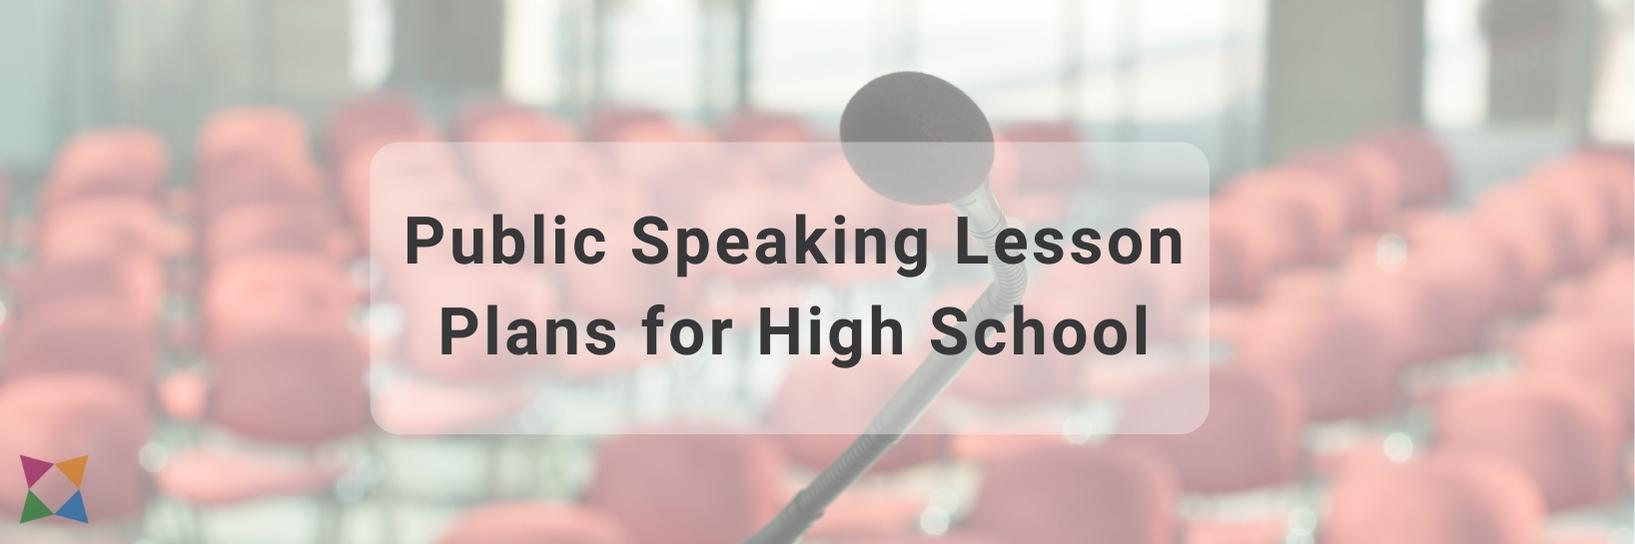 3 Best Public Speaking Lesson Plans for High School